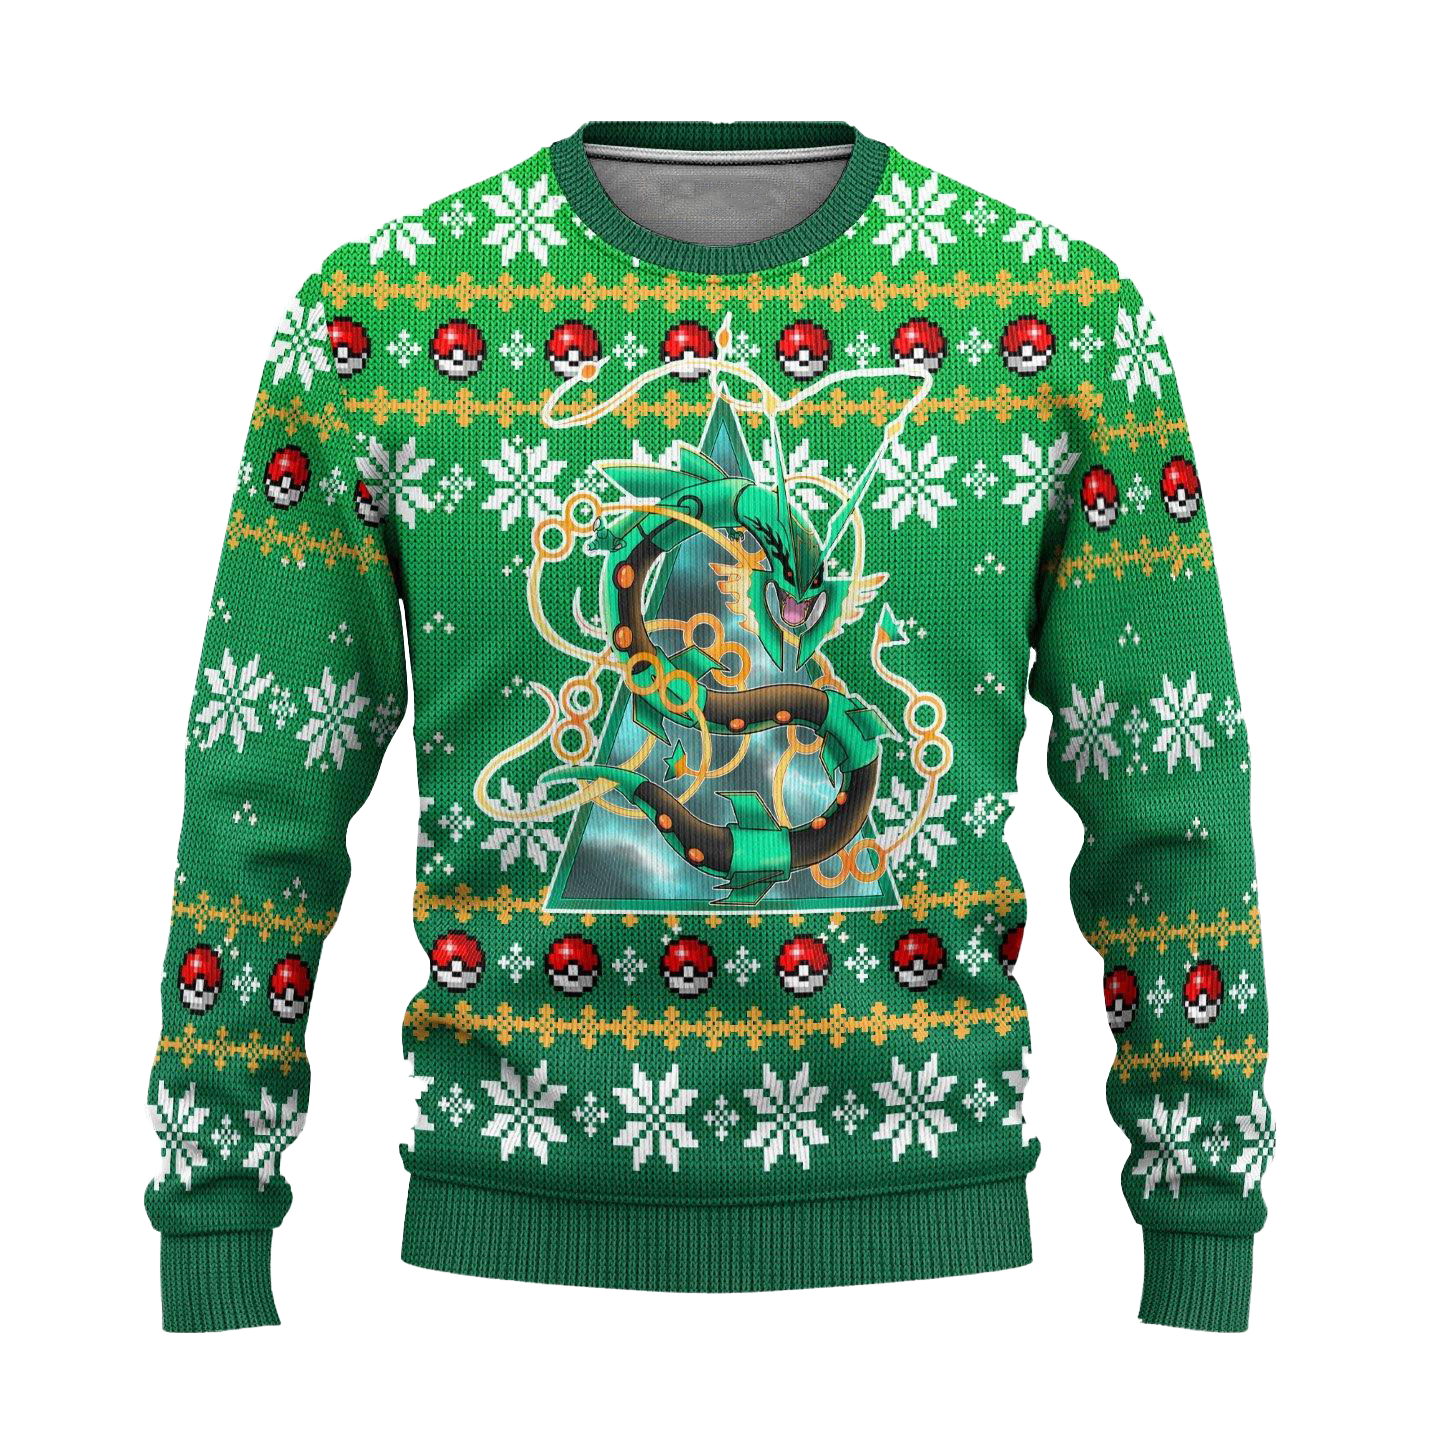 Pokemon Rayquaza Anime Ugly Christmas Sweater Xmas Gift